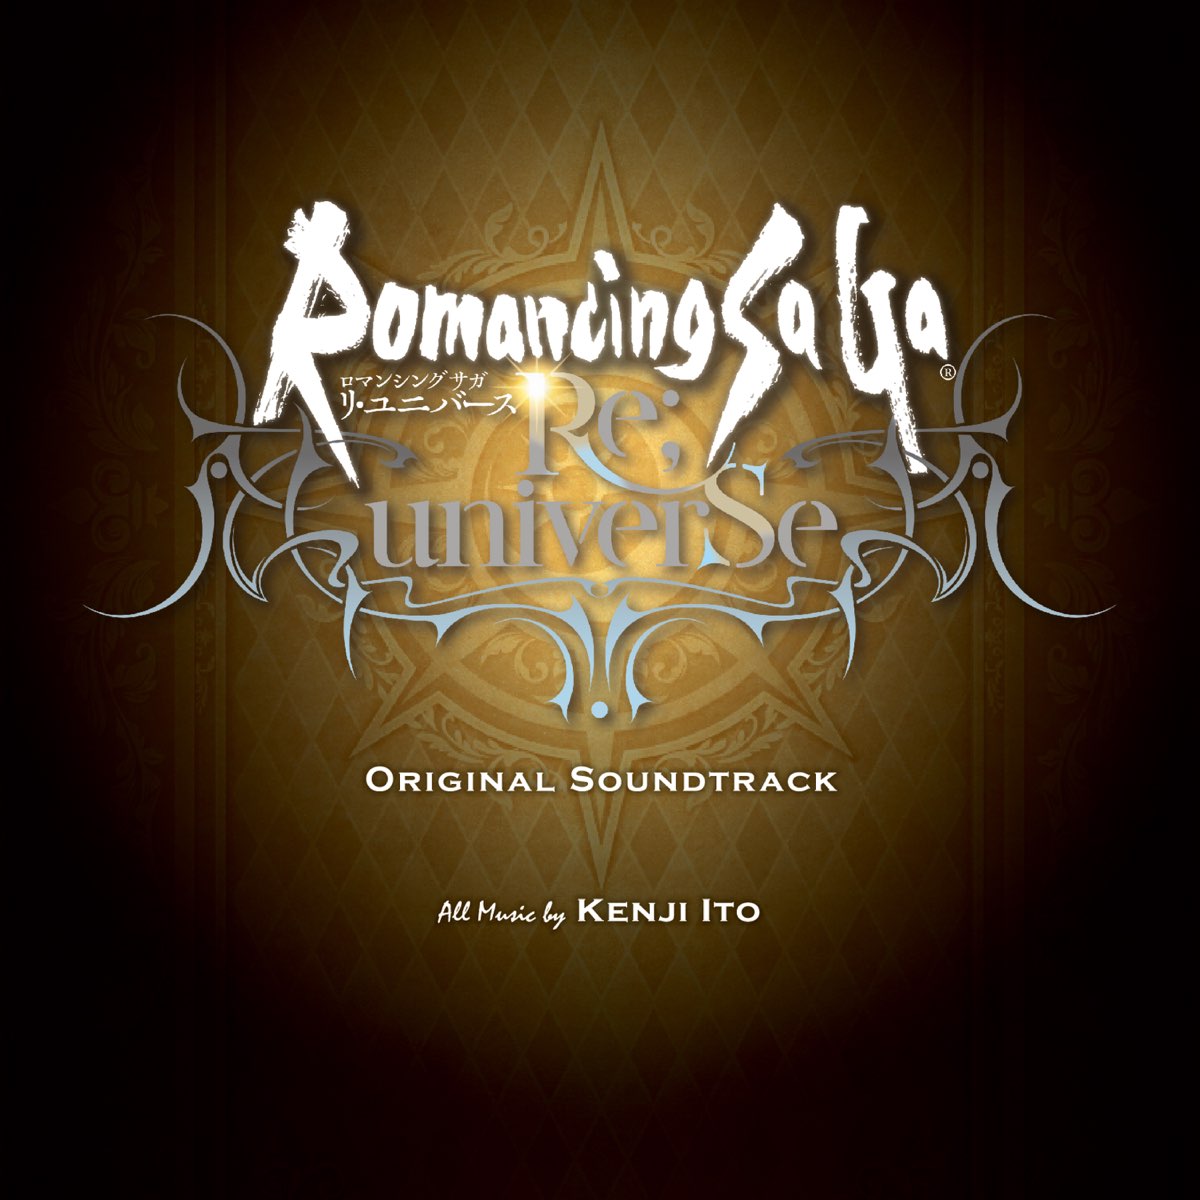 Romancing saga re universe original soundtrack